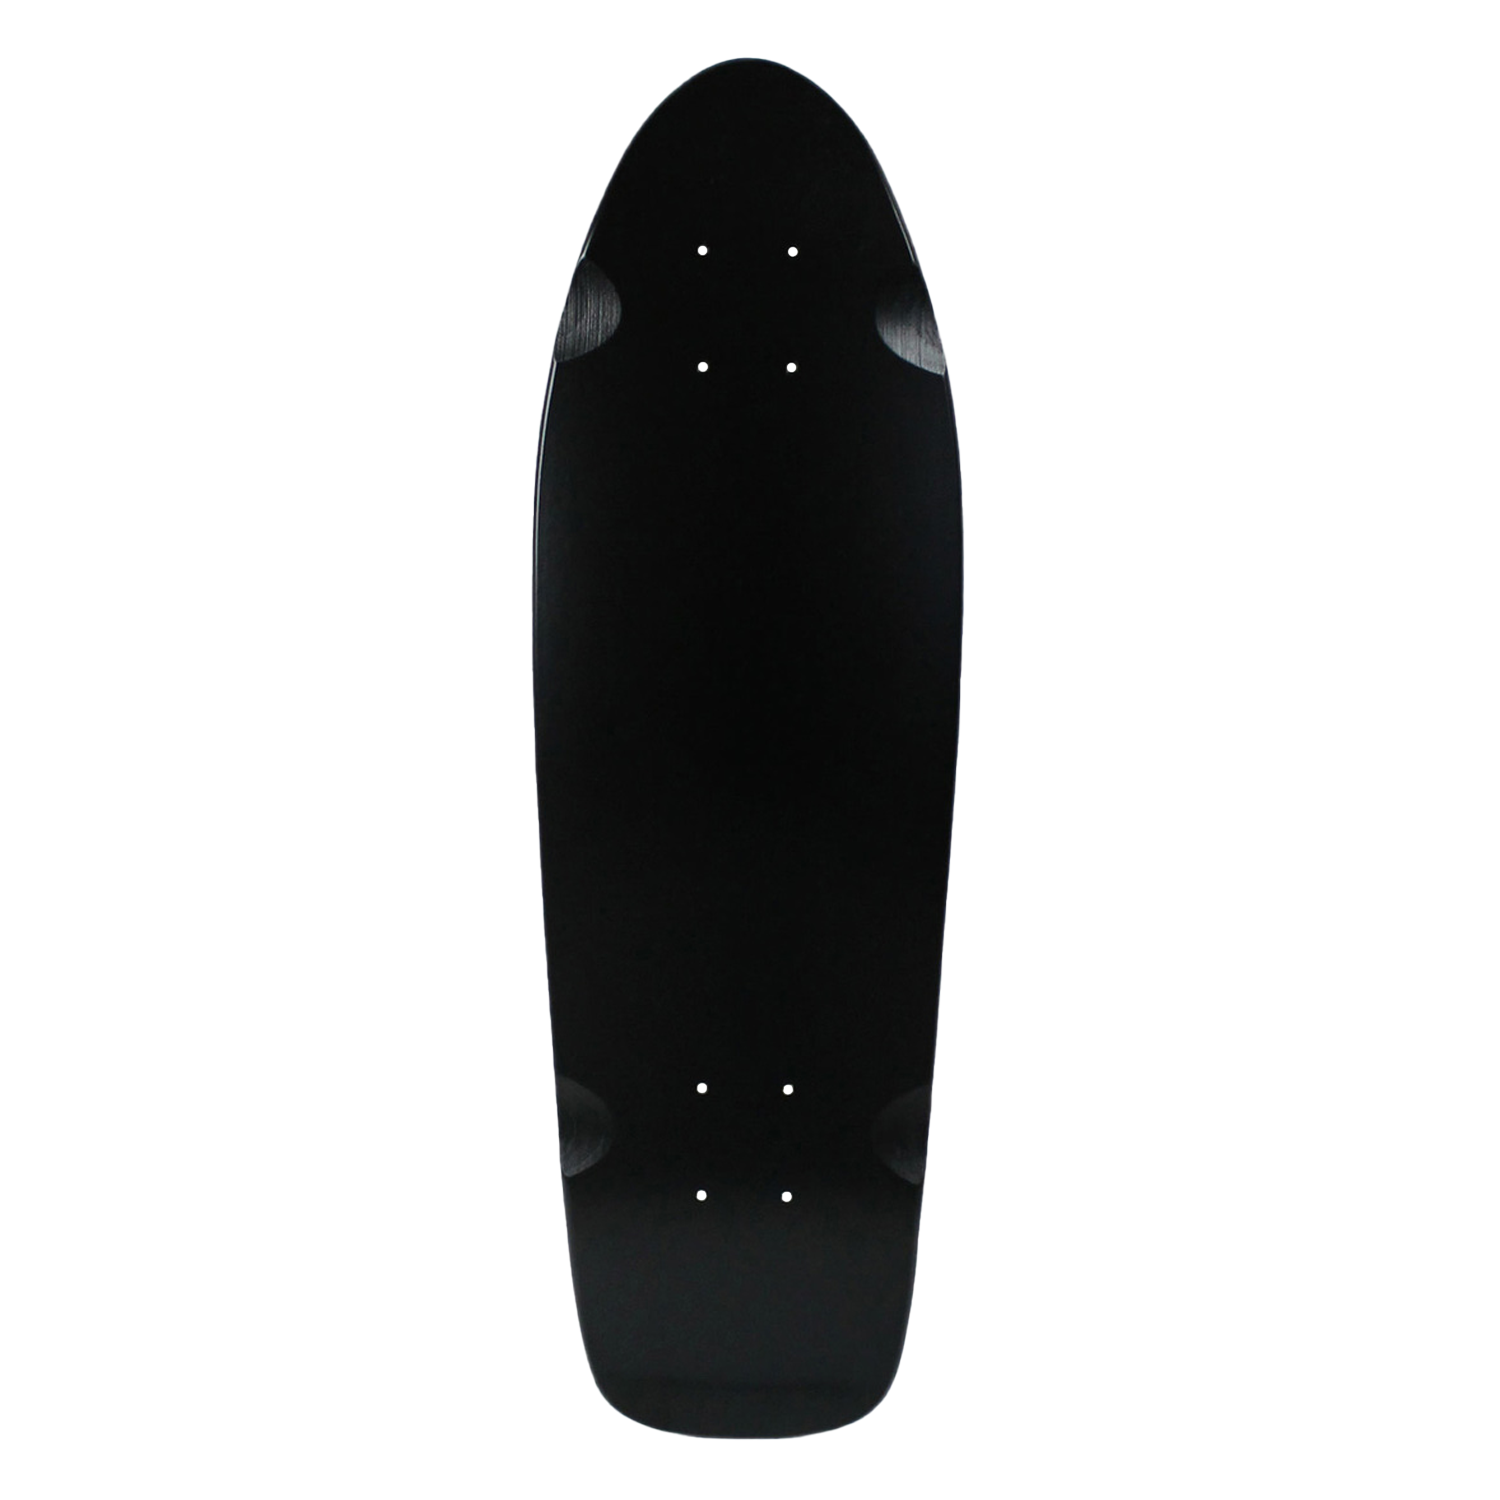 Moose Skateboard Cruiser Deck Dip Black 8in x 26.5in